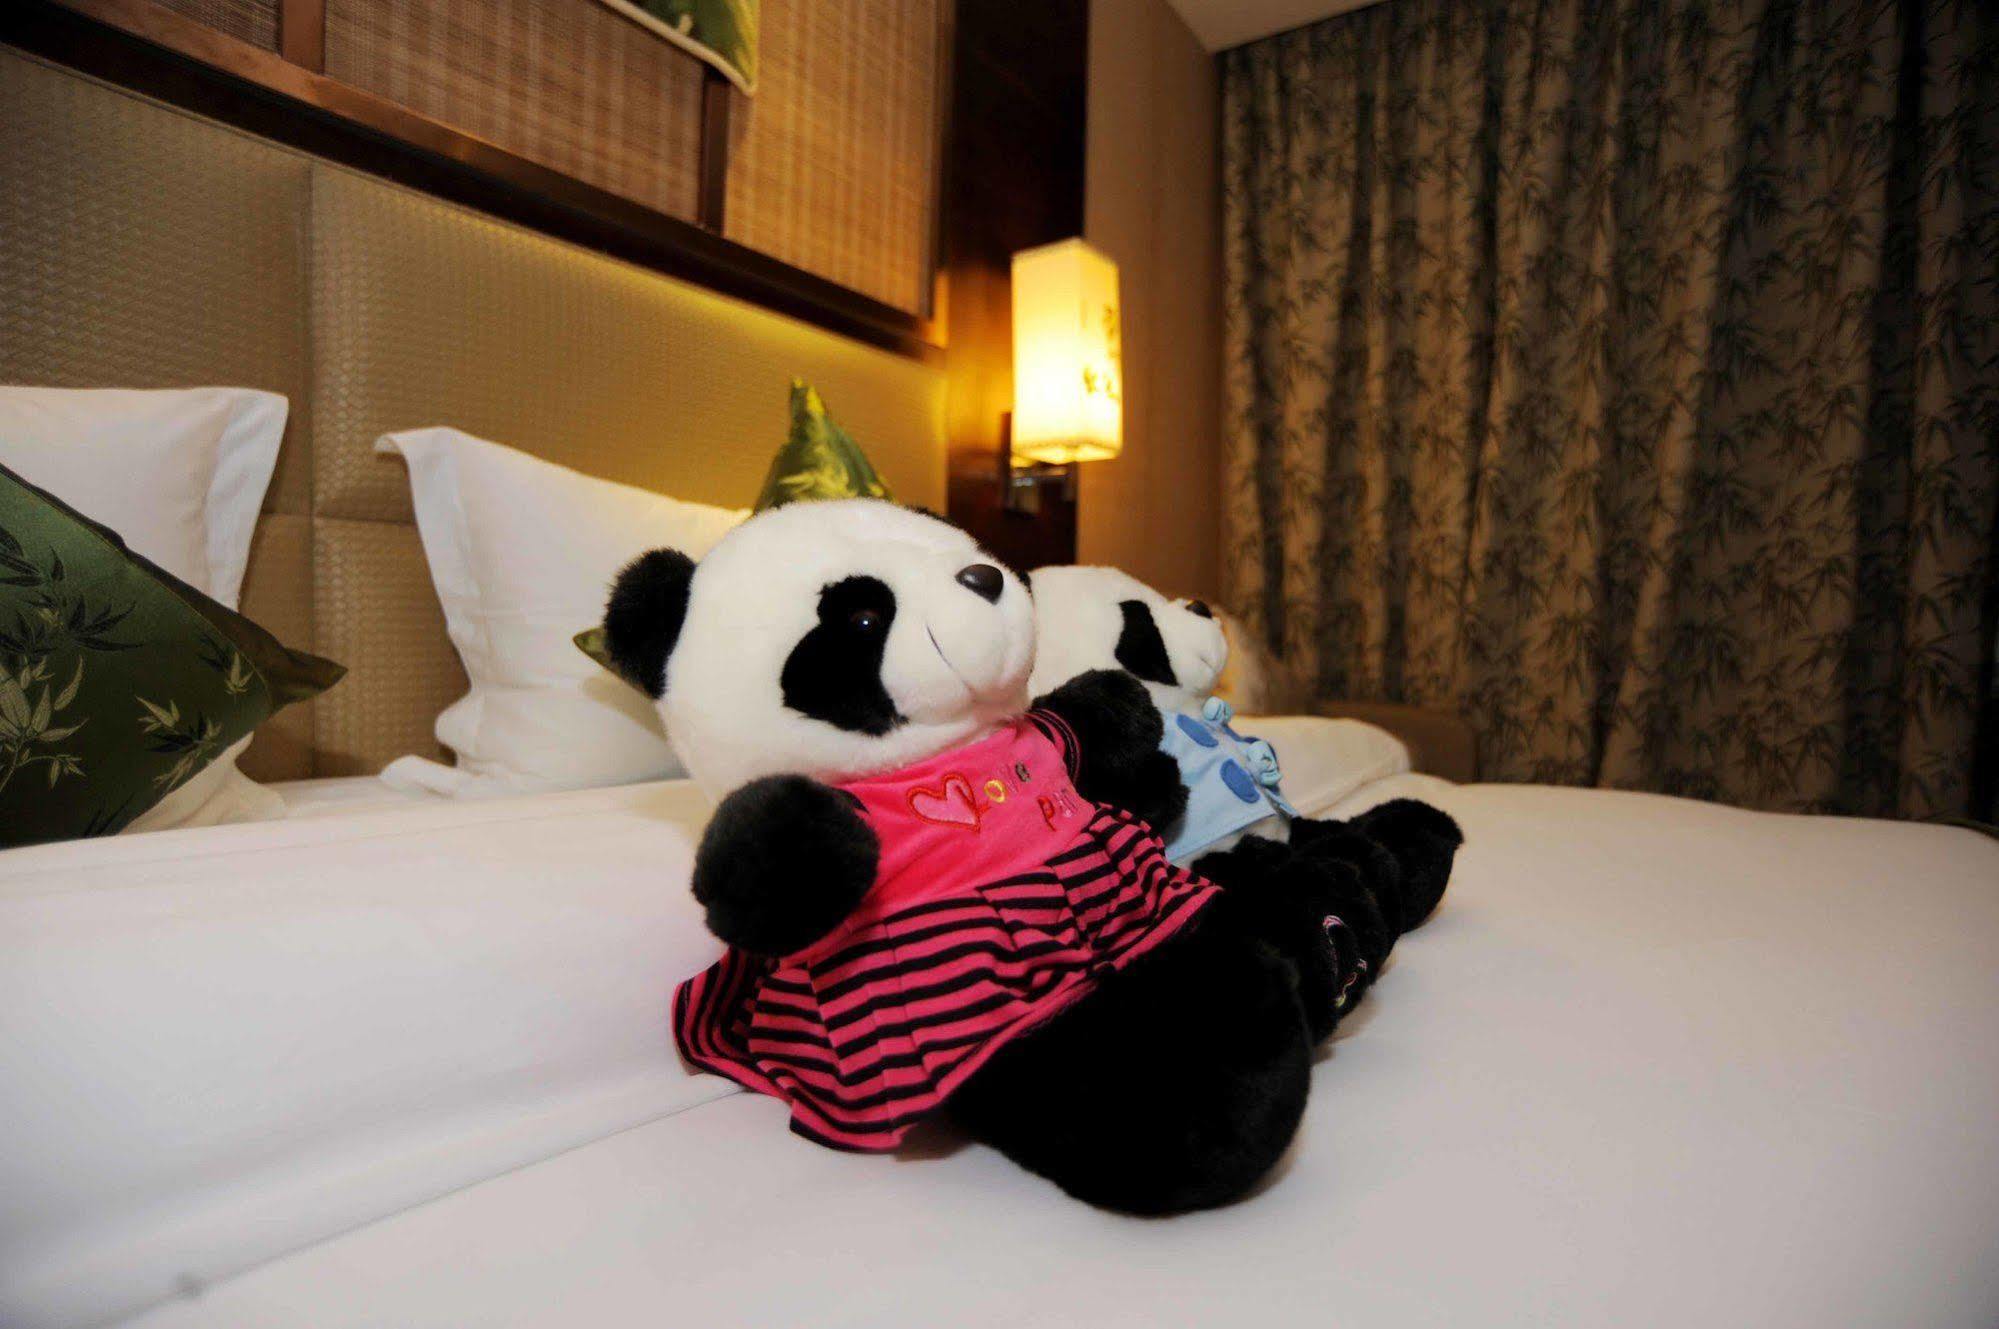 Chengdu Panda Prince Culture Hotel Exterior foto